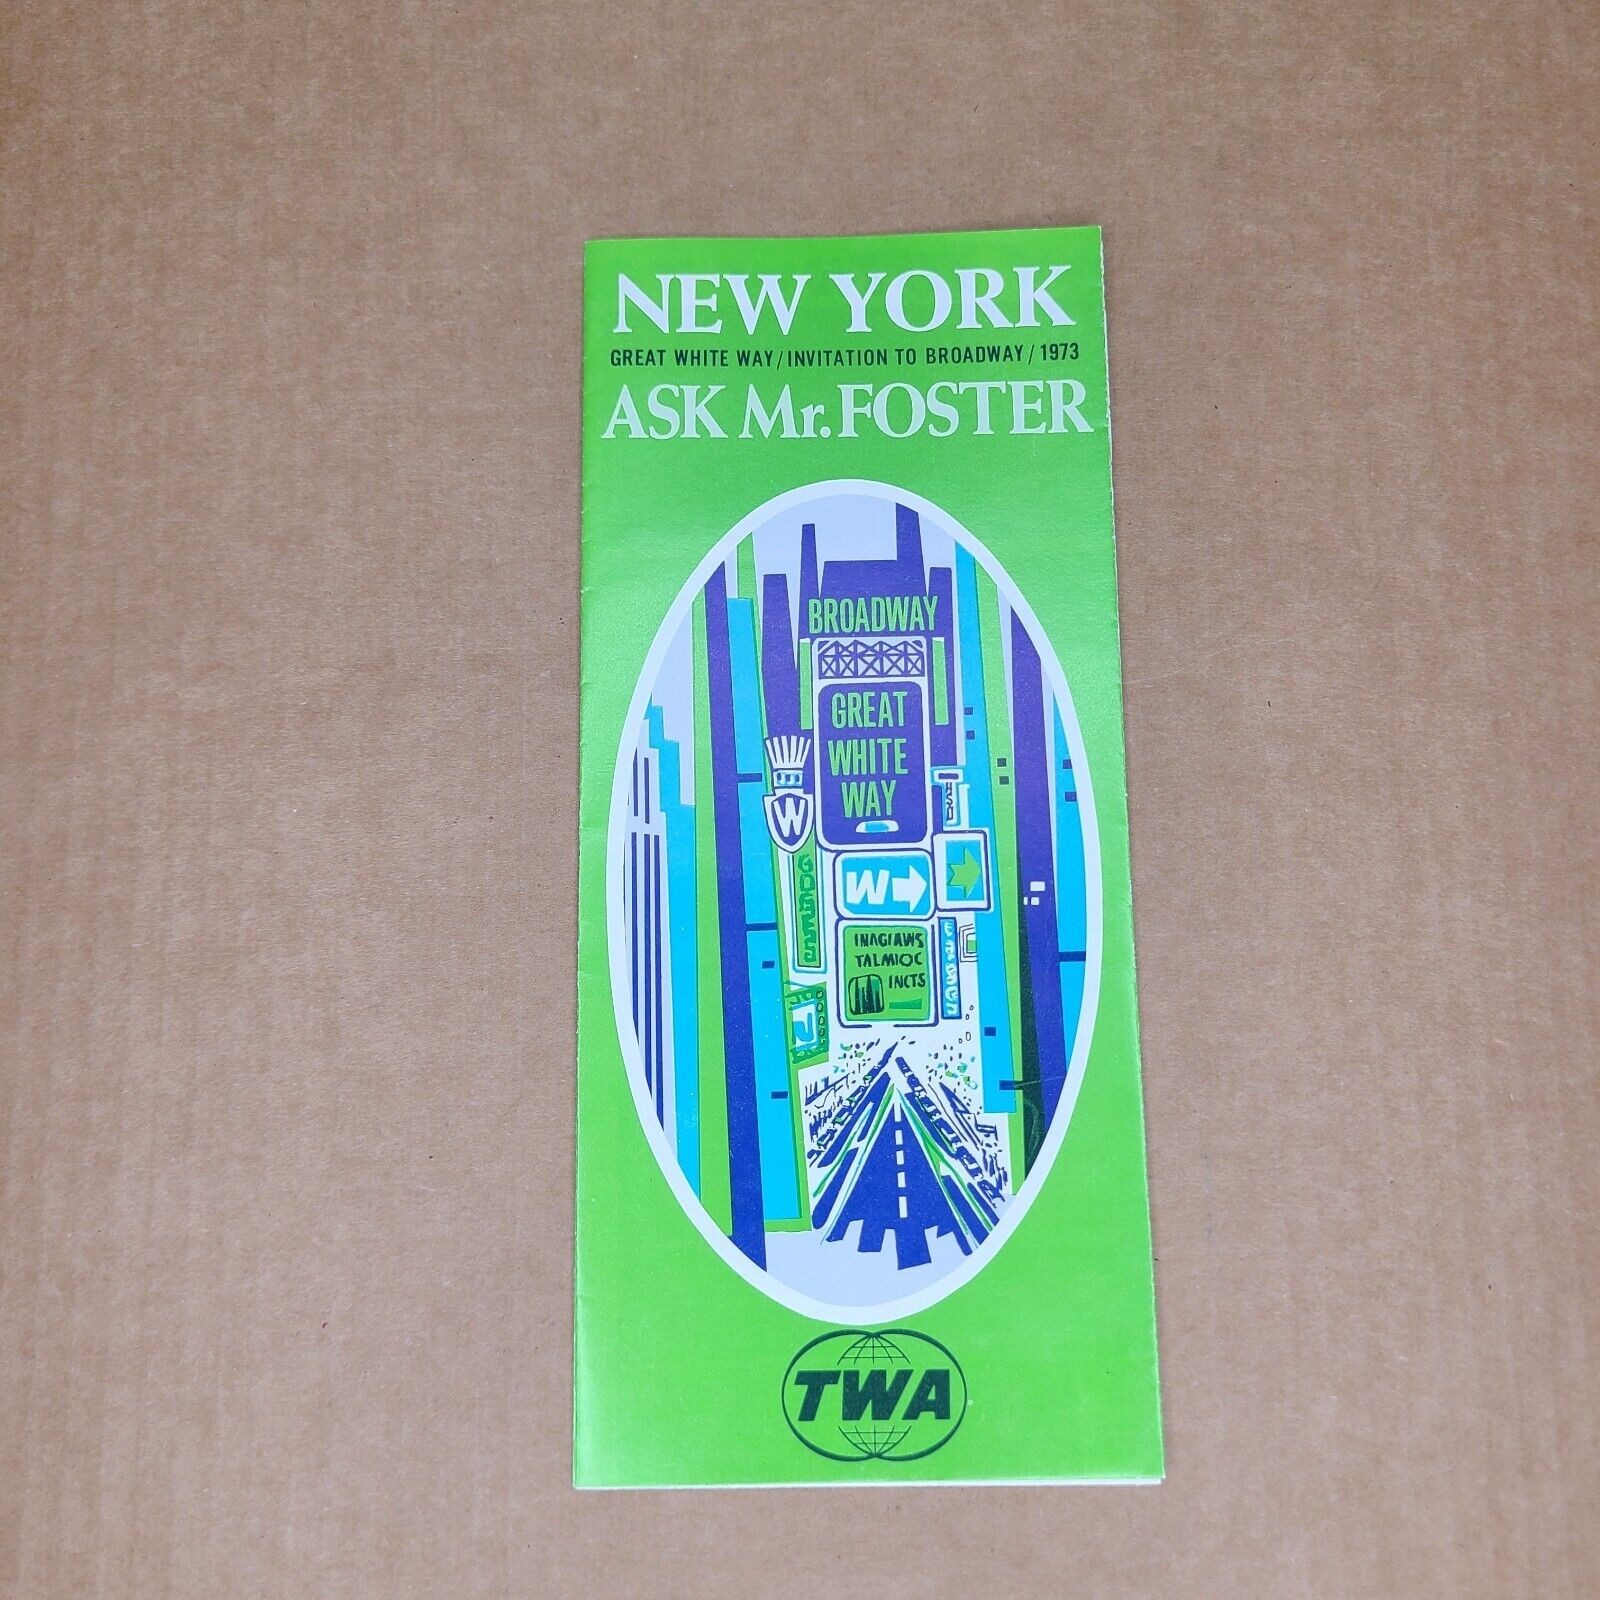 TWA New York Broadway Advertising Brochure